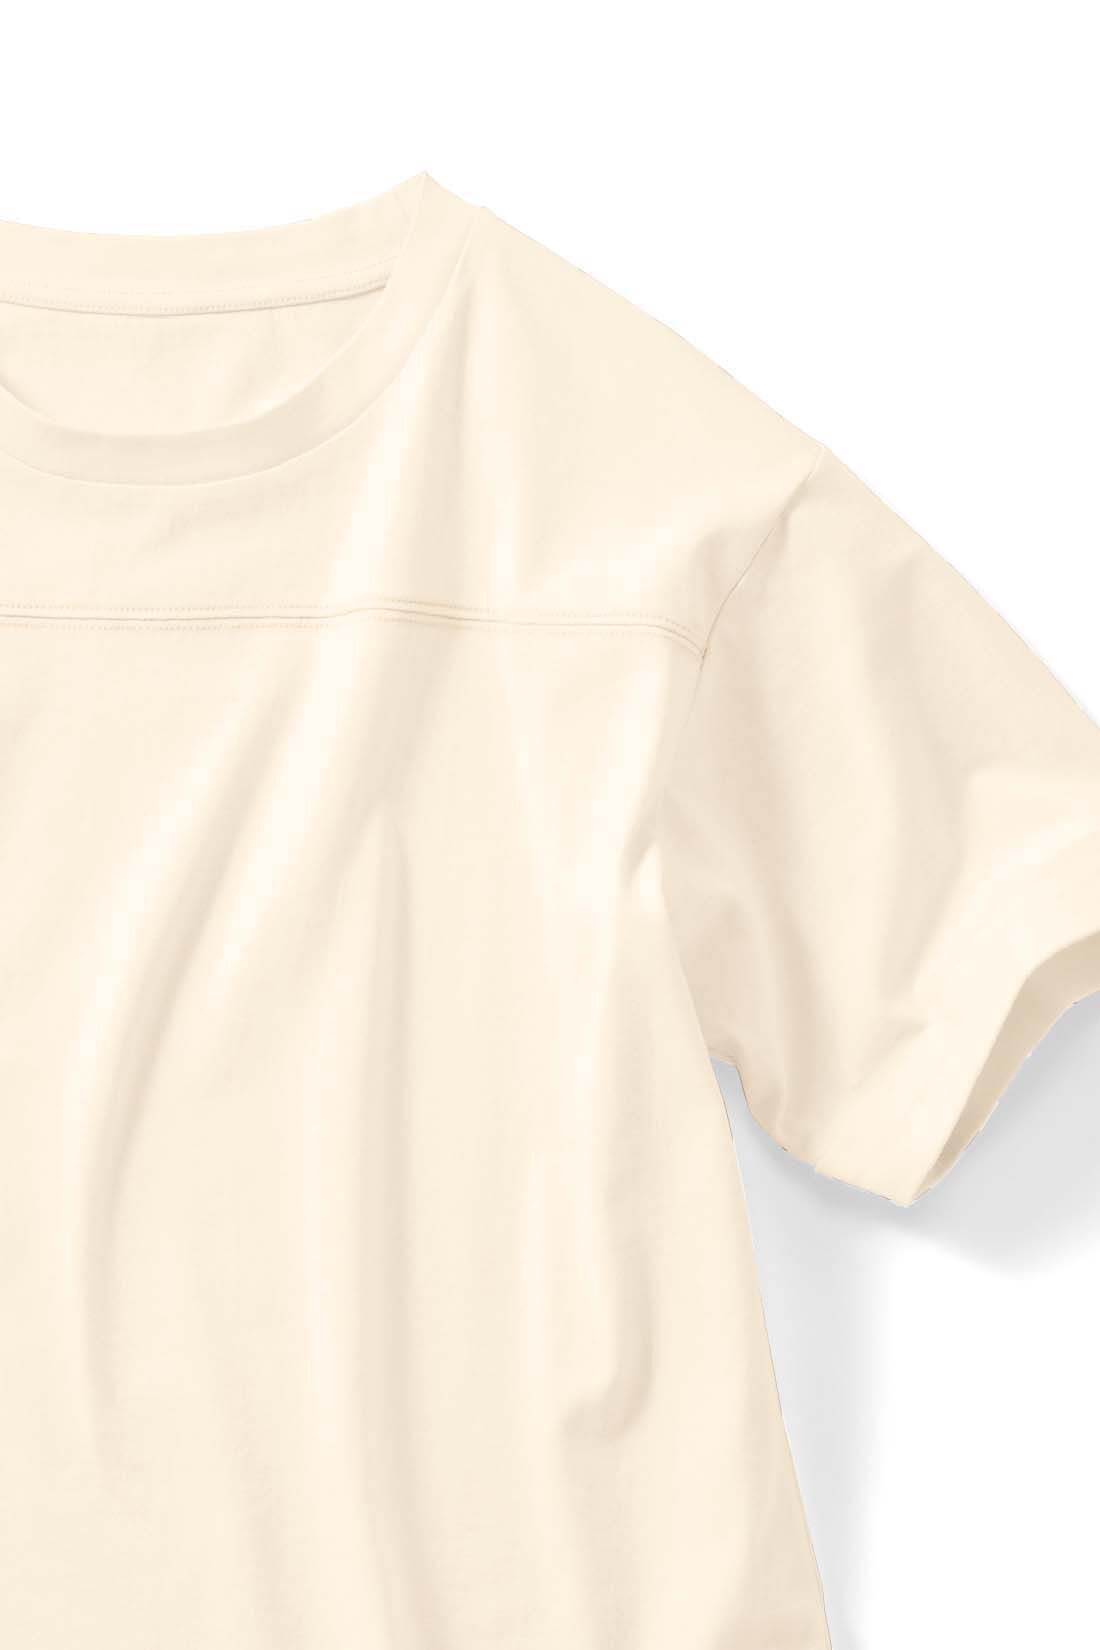 Real Stock|Live love cottonプロジェクト　リブ イン コンフォート　栞里ちゃんとつくったオーガニックコットンの大人ナンバーTシャツ〈オフホワイト〉|天竺（じく）編みで、ほどよい厚みのインド産オーガニックコットン100％。